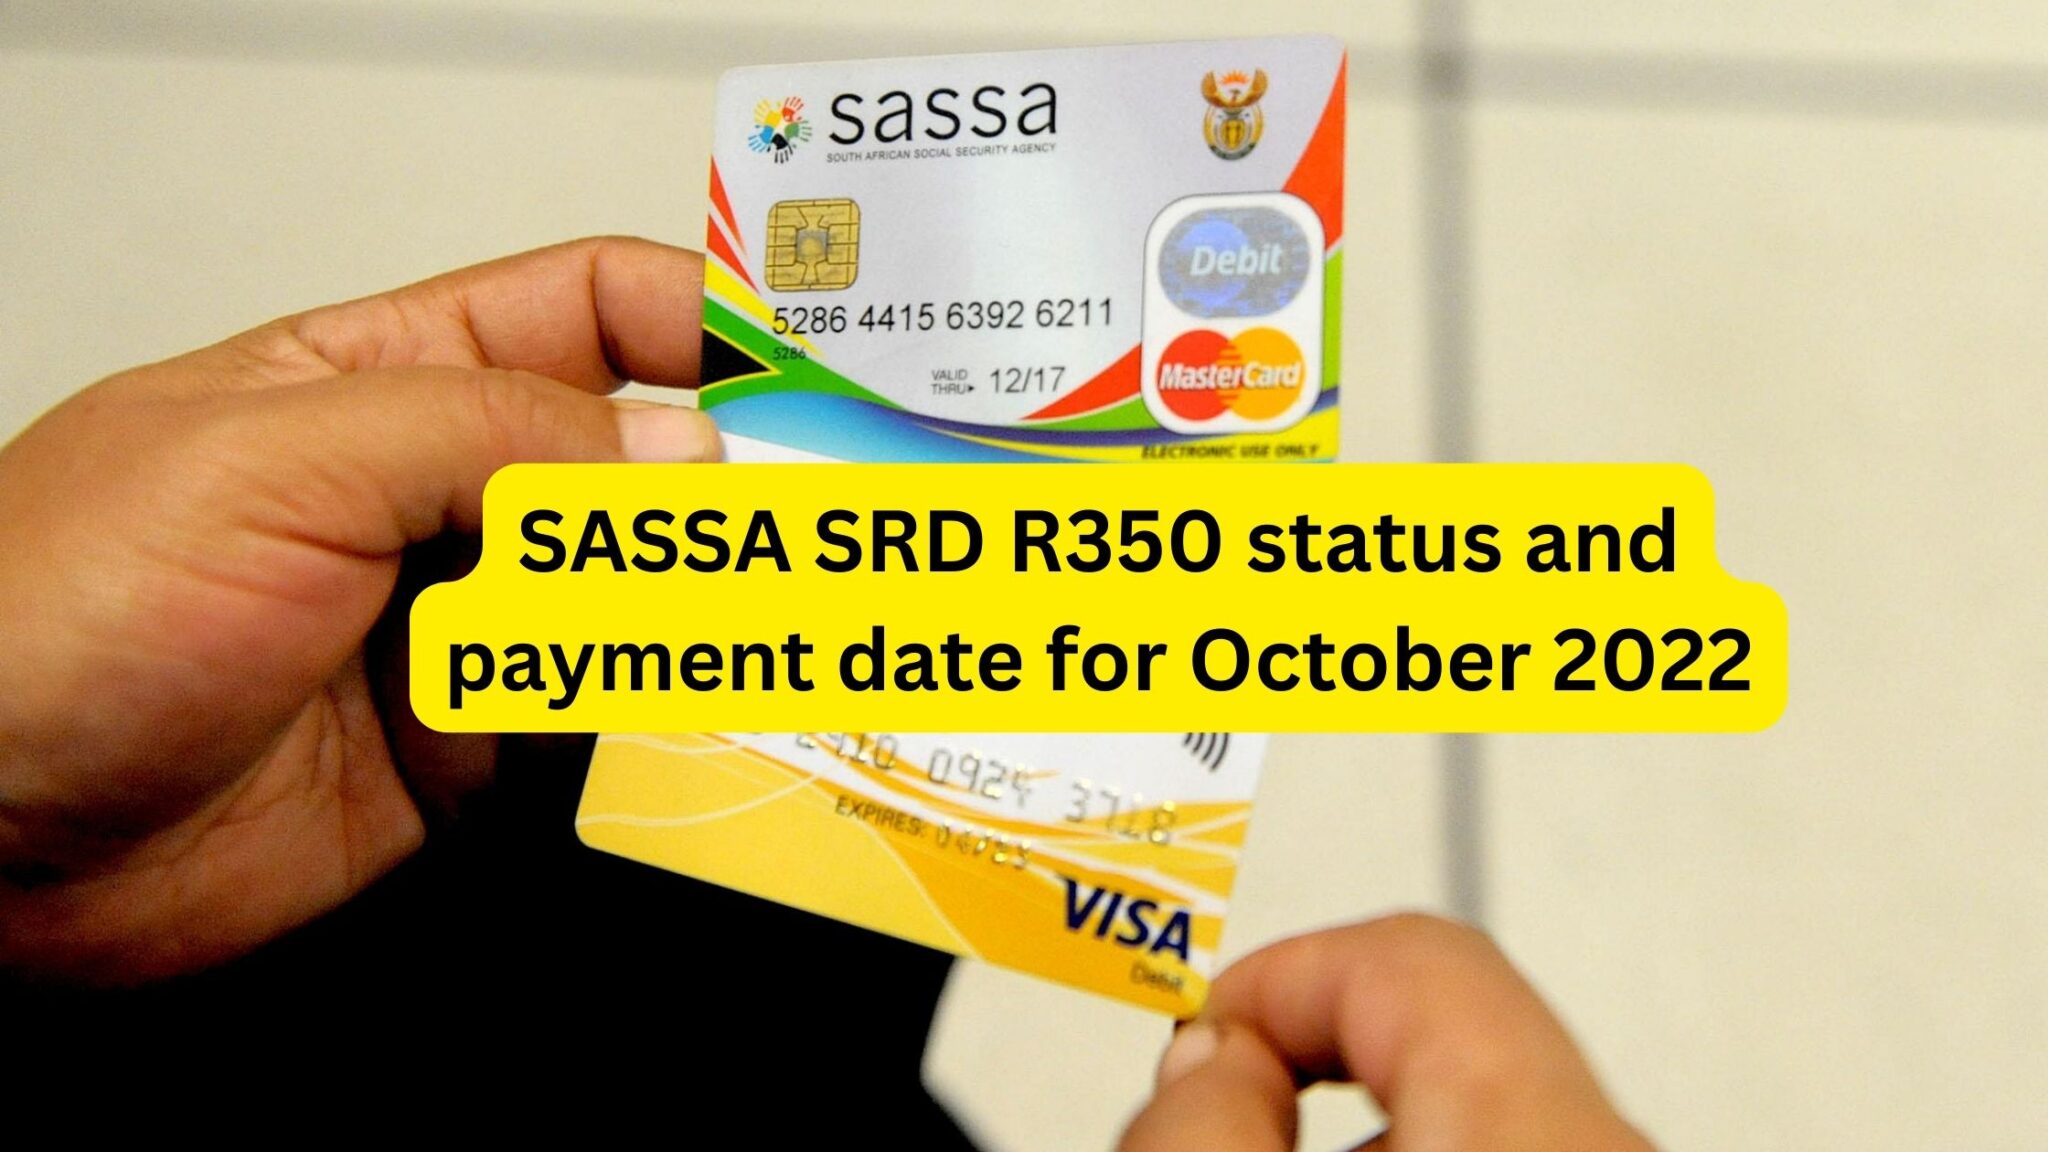 SASSA SRD R350 status and payment date for October 2022 SASSA NEWS